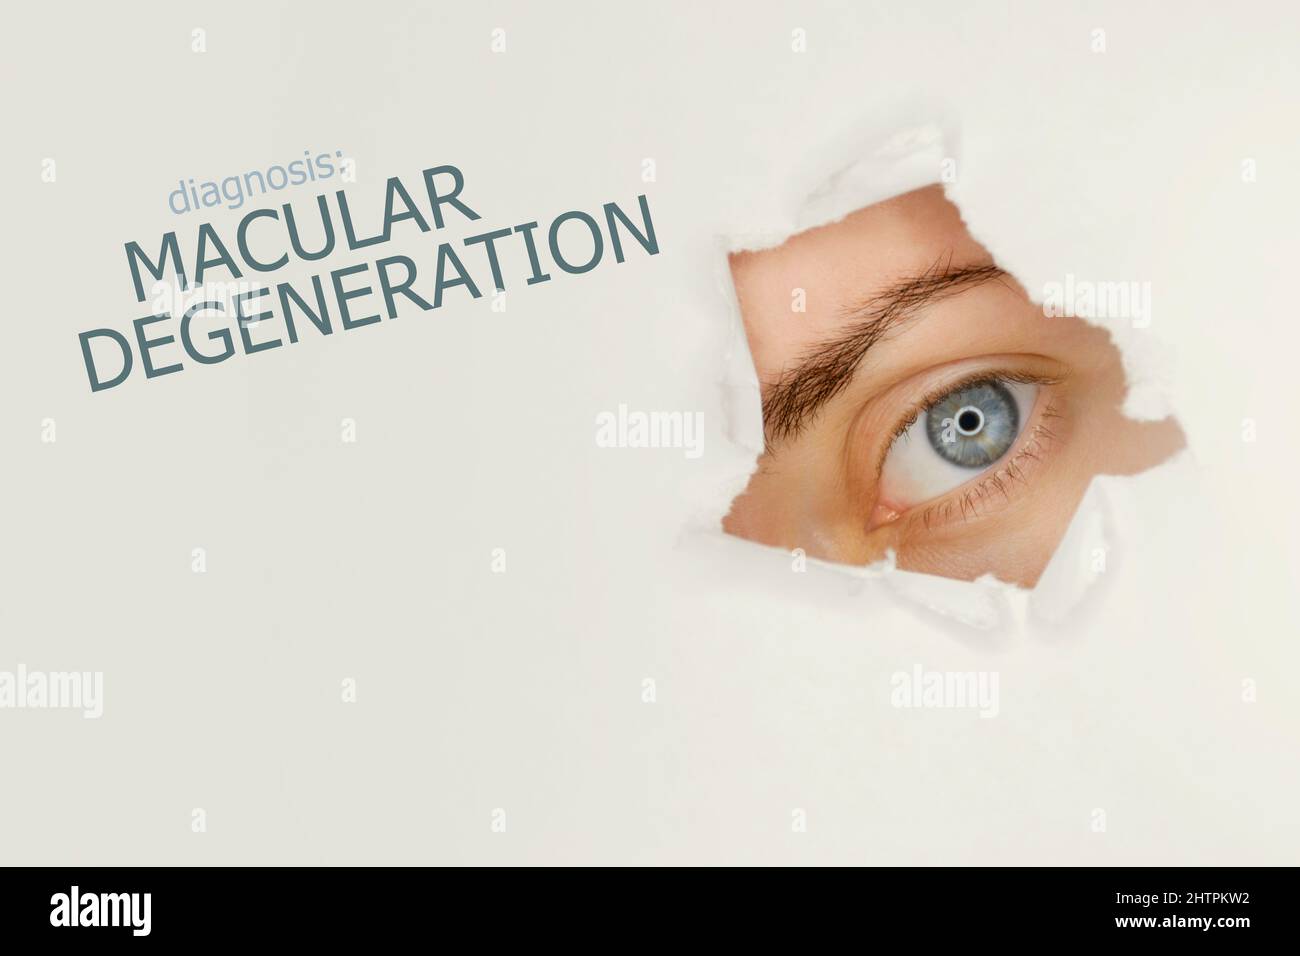 Macular degeneration disease poster with eye test chart and blue eye. Studio grey background Stock Photo